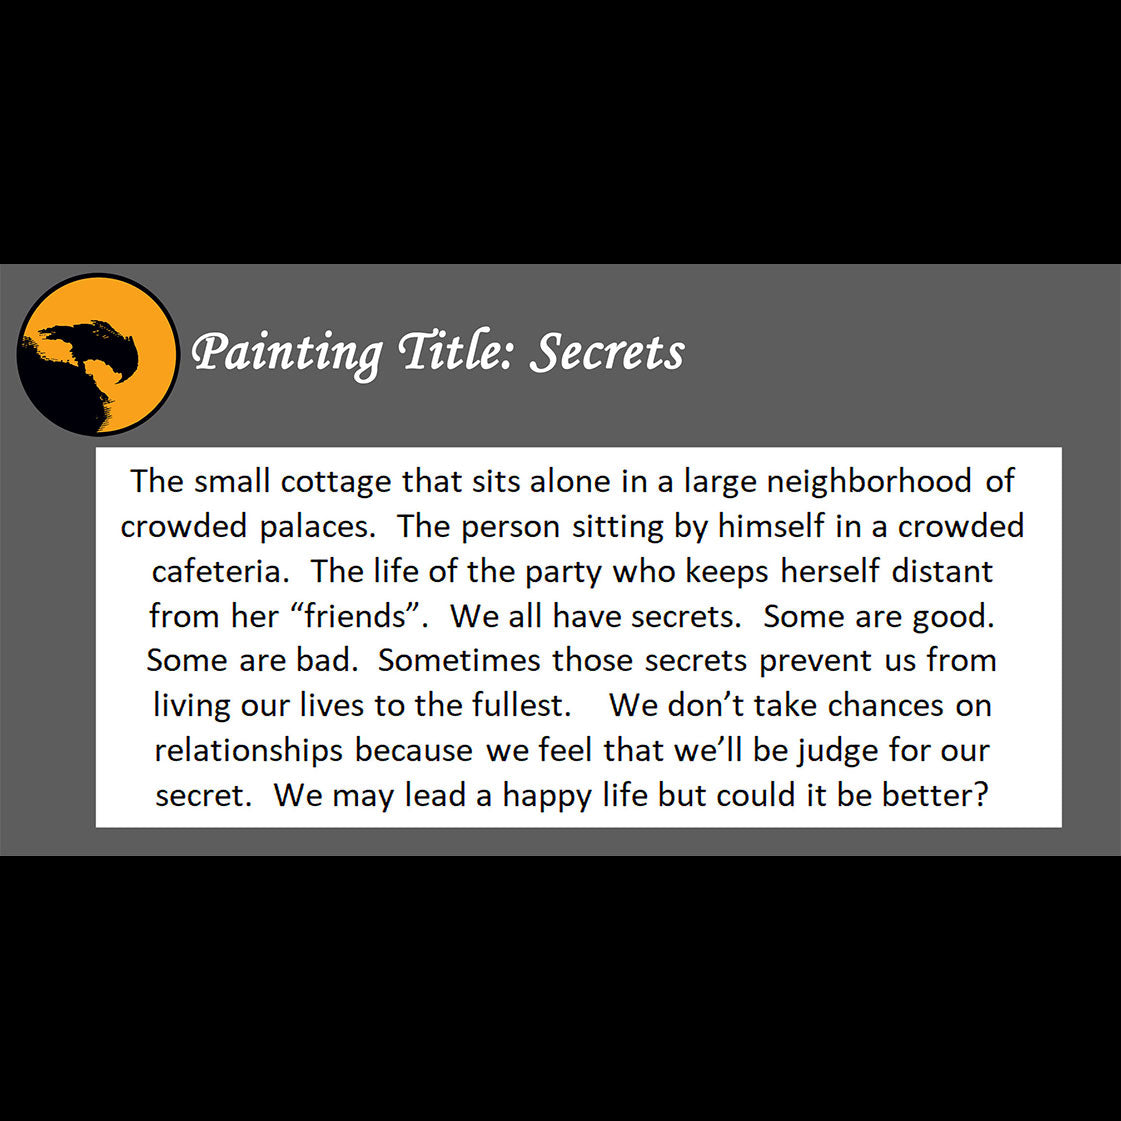 Secrets - about keeping secrets - 11x14, 11x17 Poster